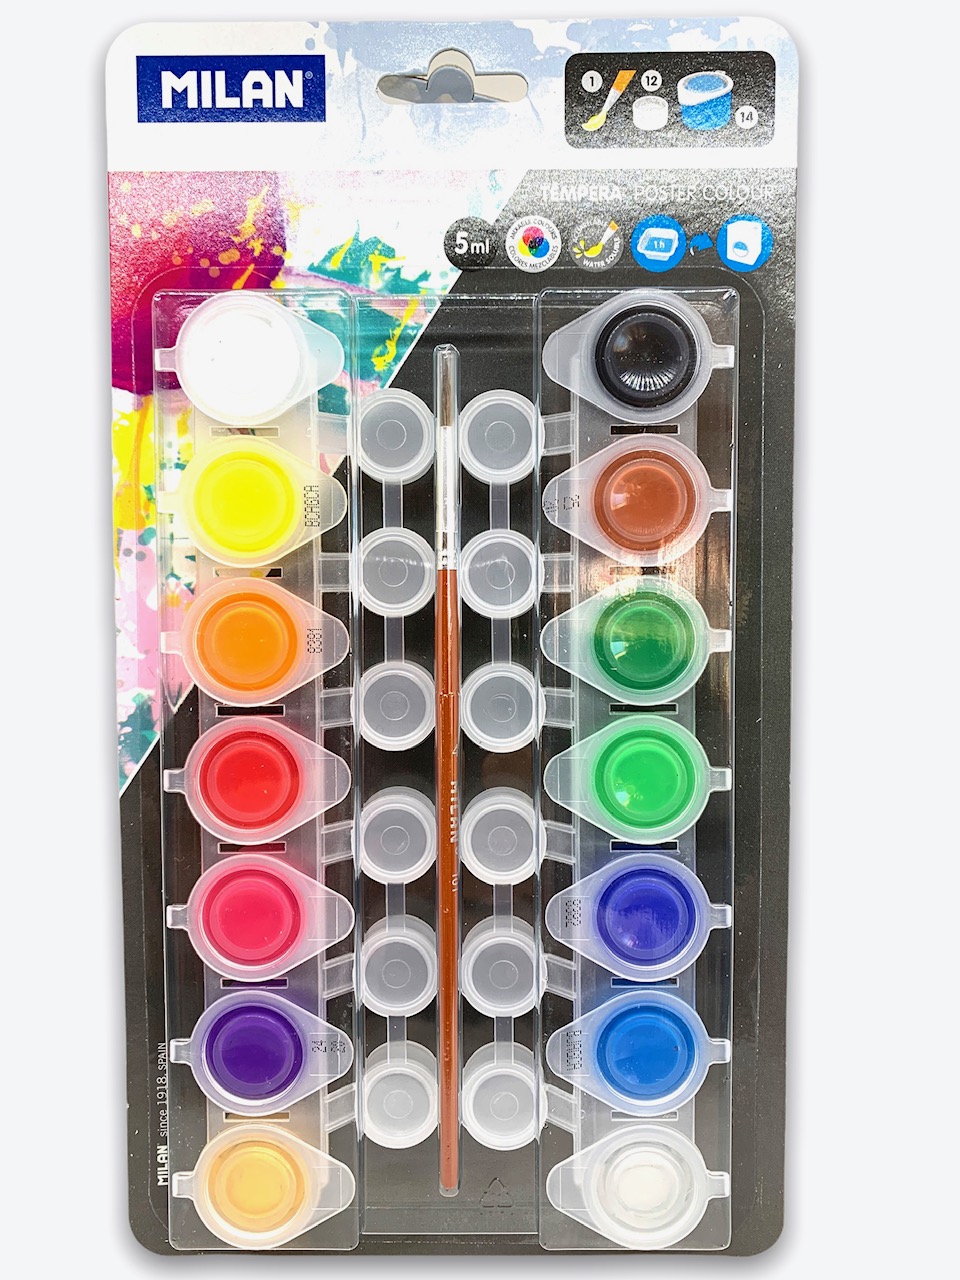 Set De Pinceles De Colores Para Pintura Acrílica, Témperas